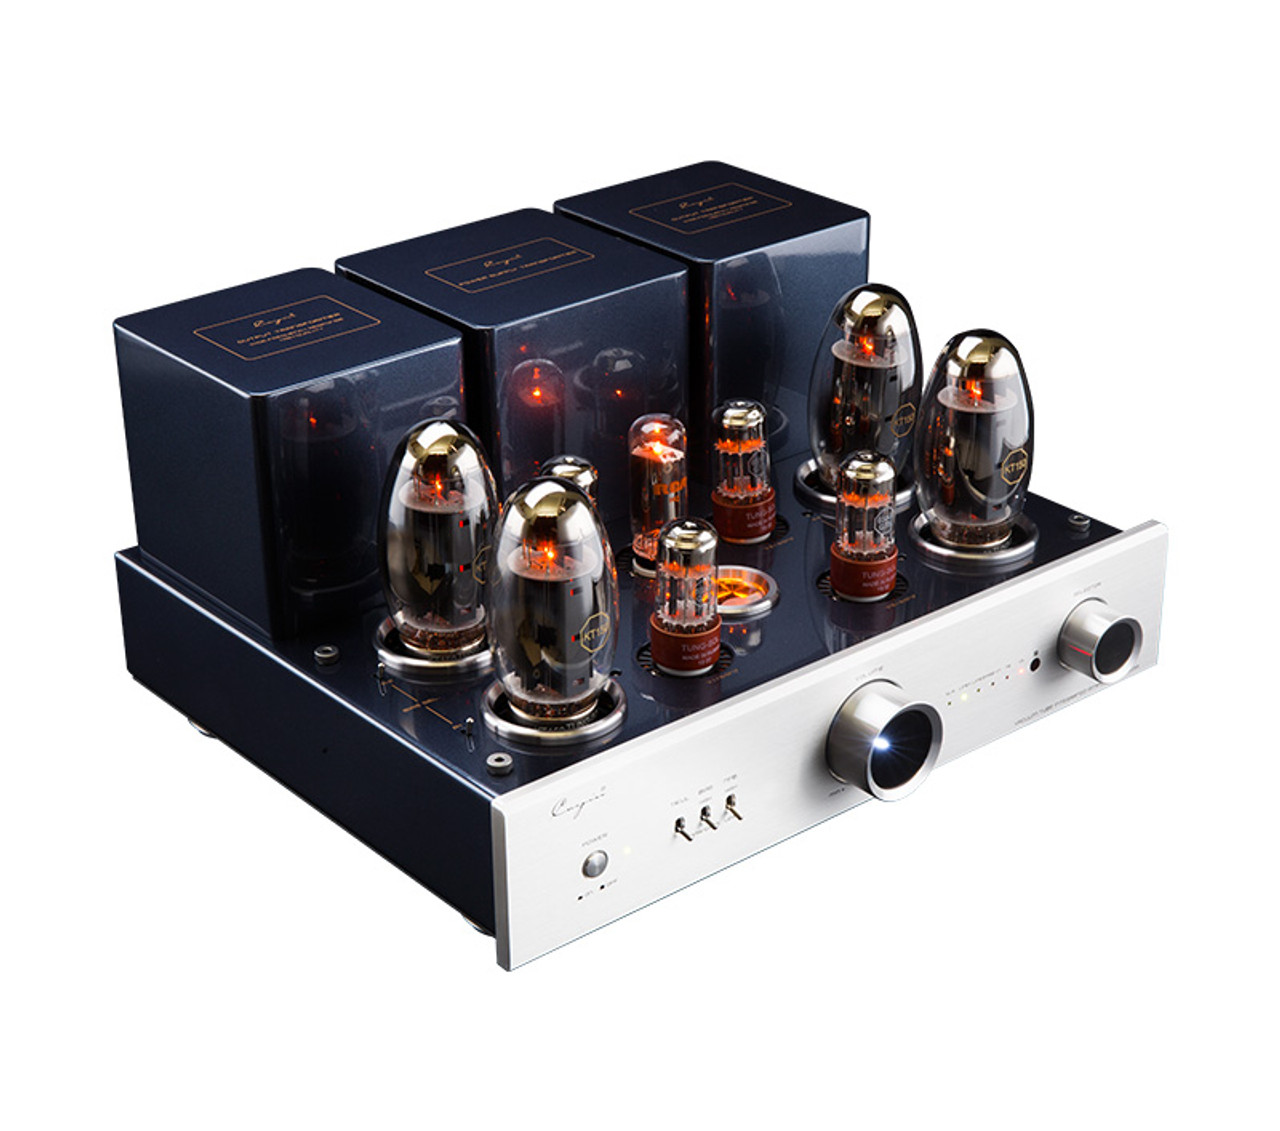 Cayin CS-150A Stereo Integrated Valve Amplifier